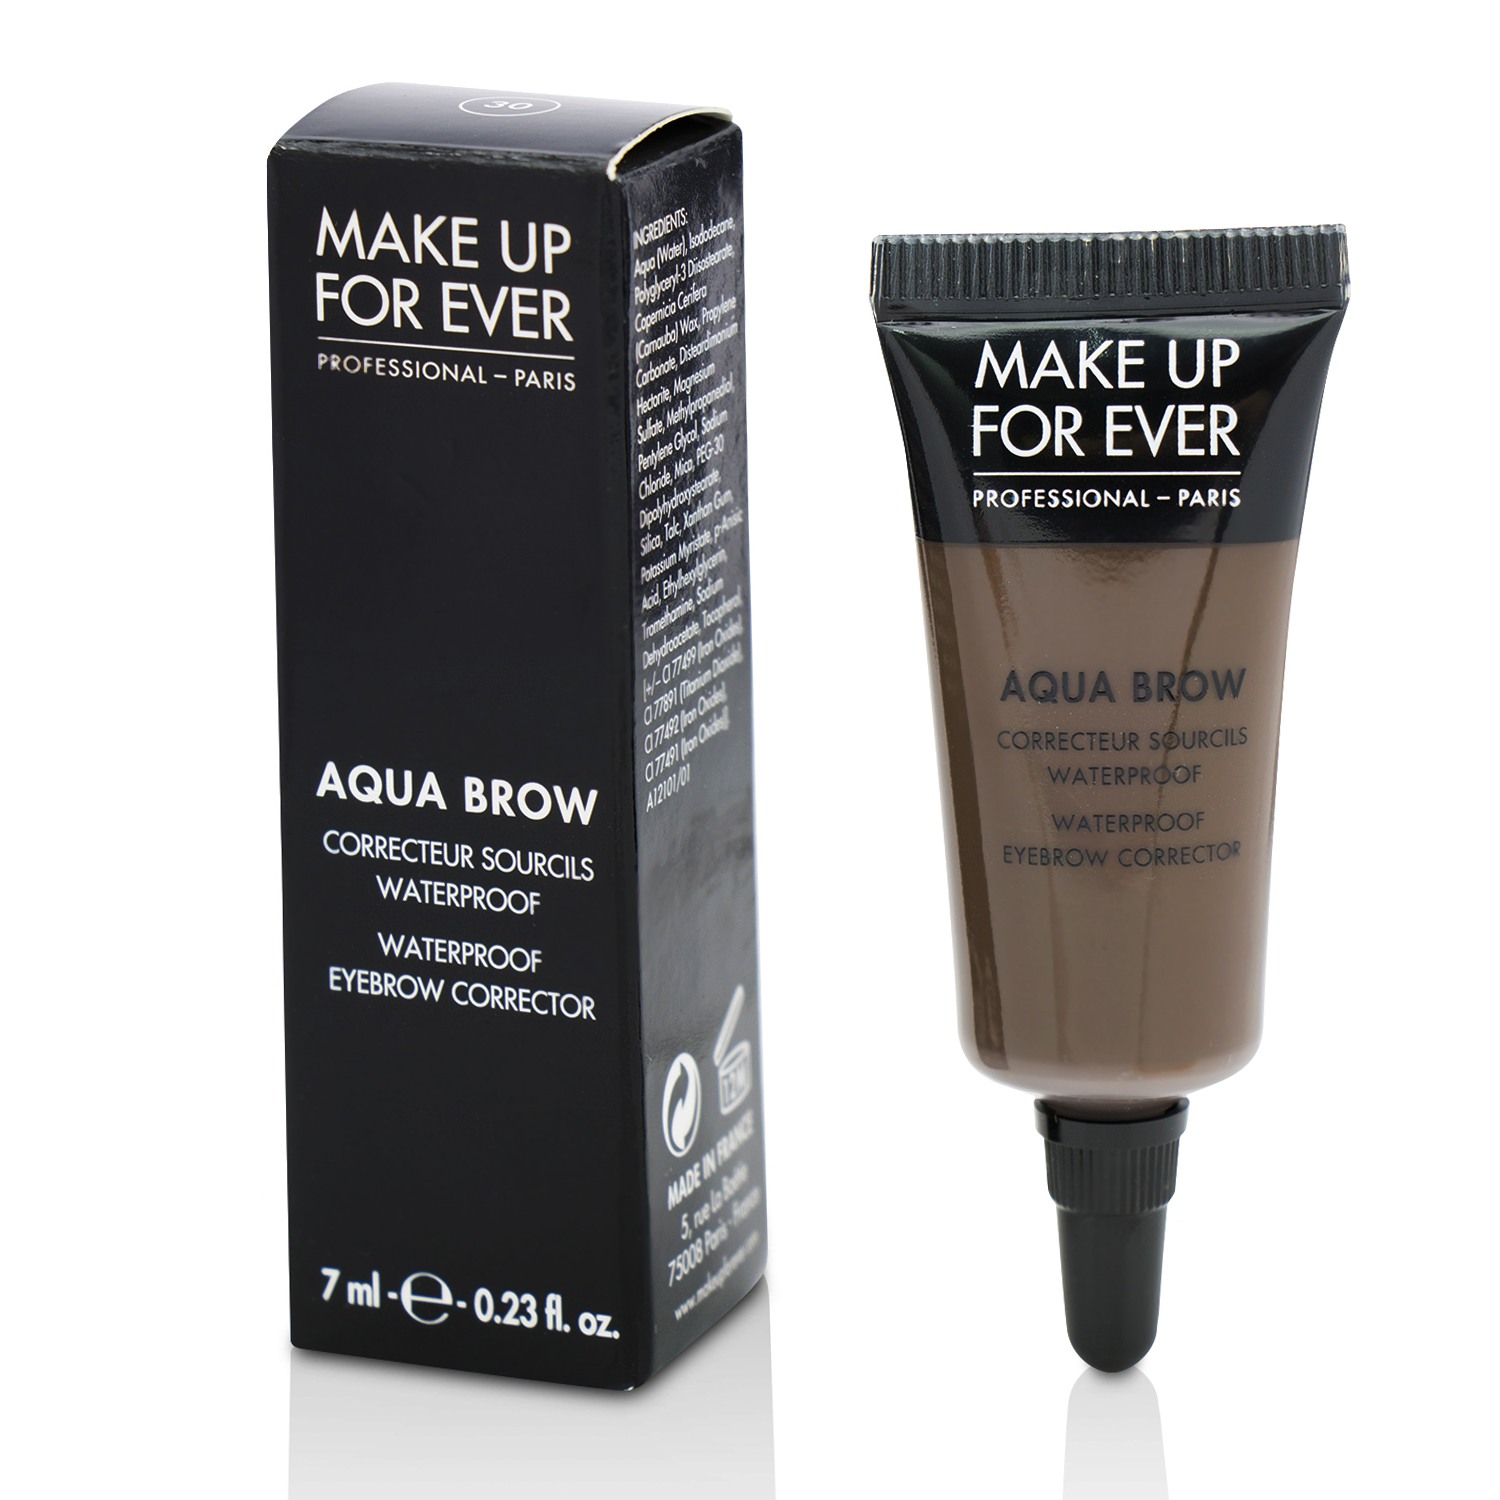 Aqua Brow Waterproof Eyebrow Corrector - # 30 (Dark Brown) Make Up For Ever Image